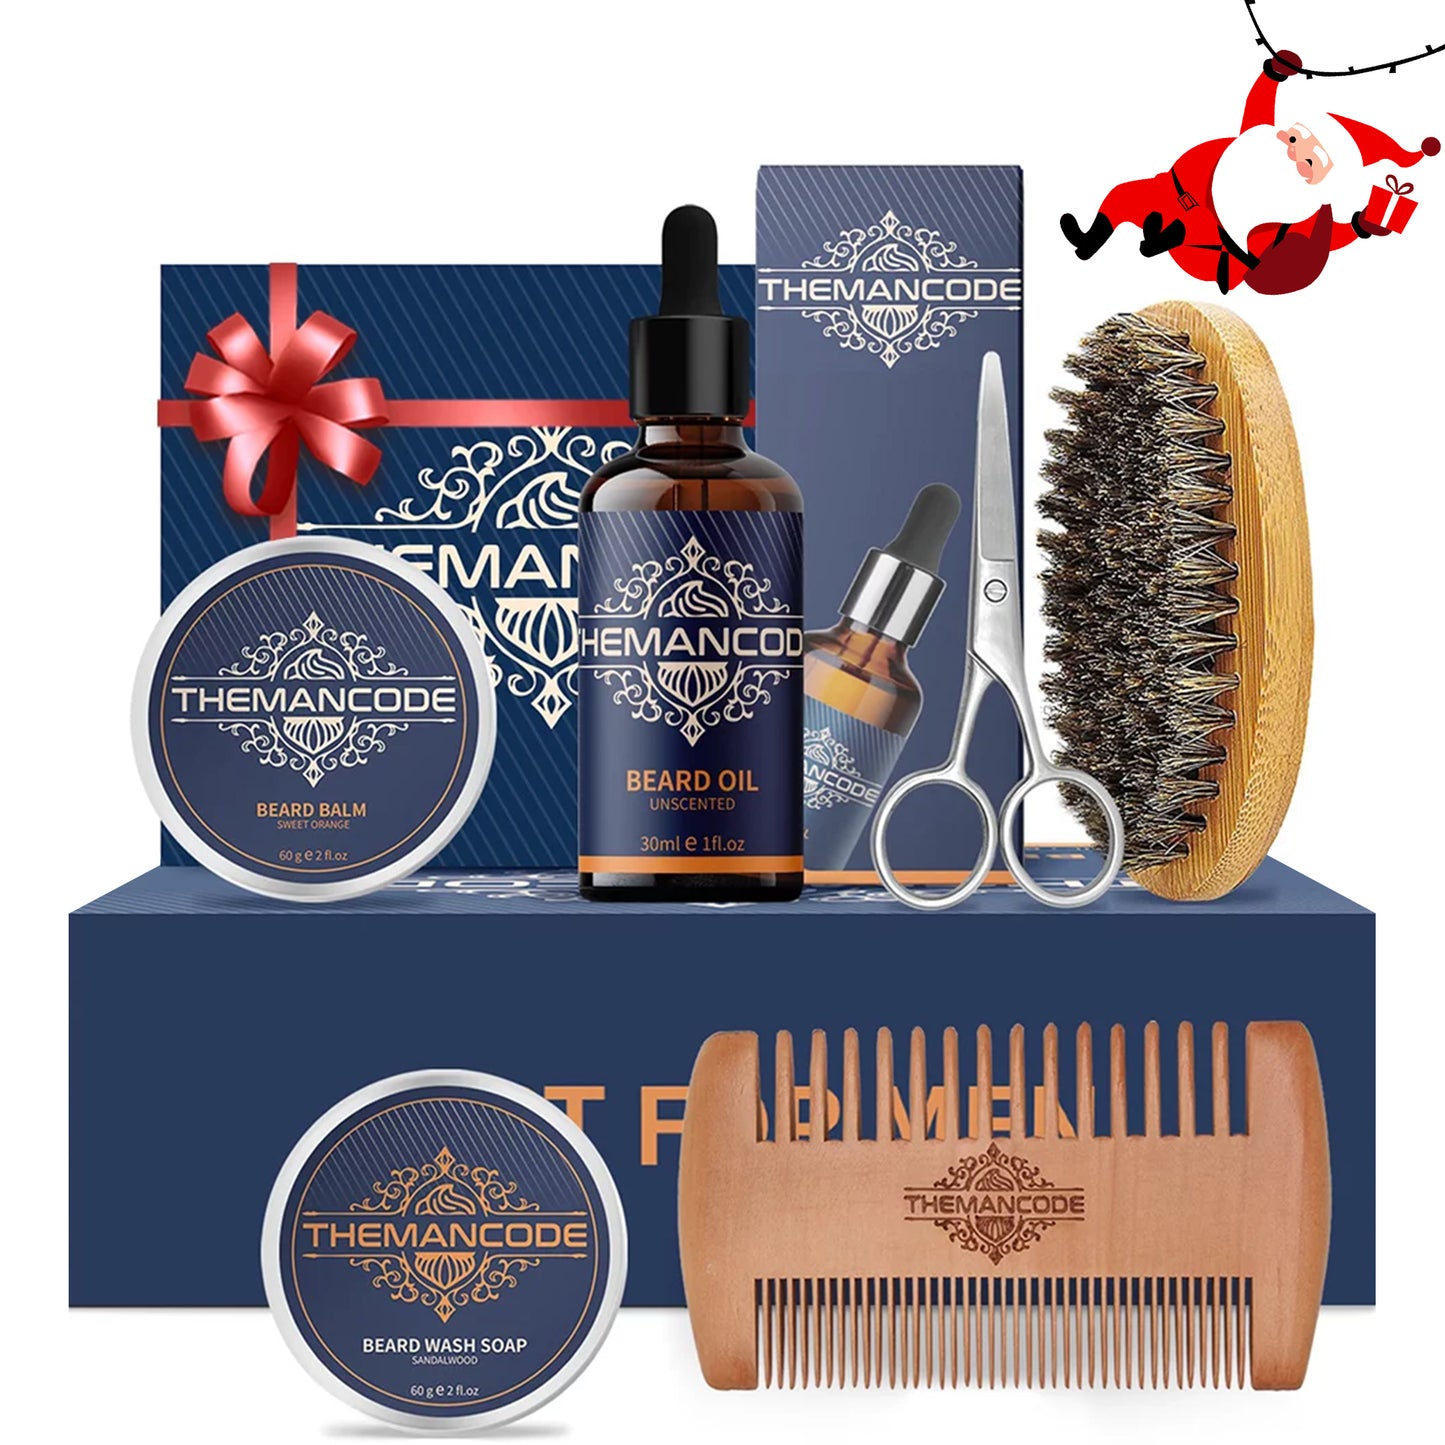 THEMANCODE Beard Care Kit, Beard Grooming & Trimming Kit for Men Care, Beard Oil & Balm, Beard Wash Soap, Mustache Scissors, Beard Comb & Brush, Perfect Valentine & Christmas Gift Set